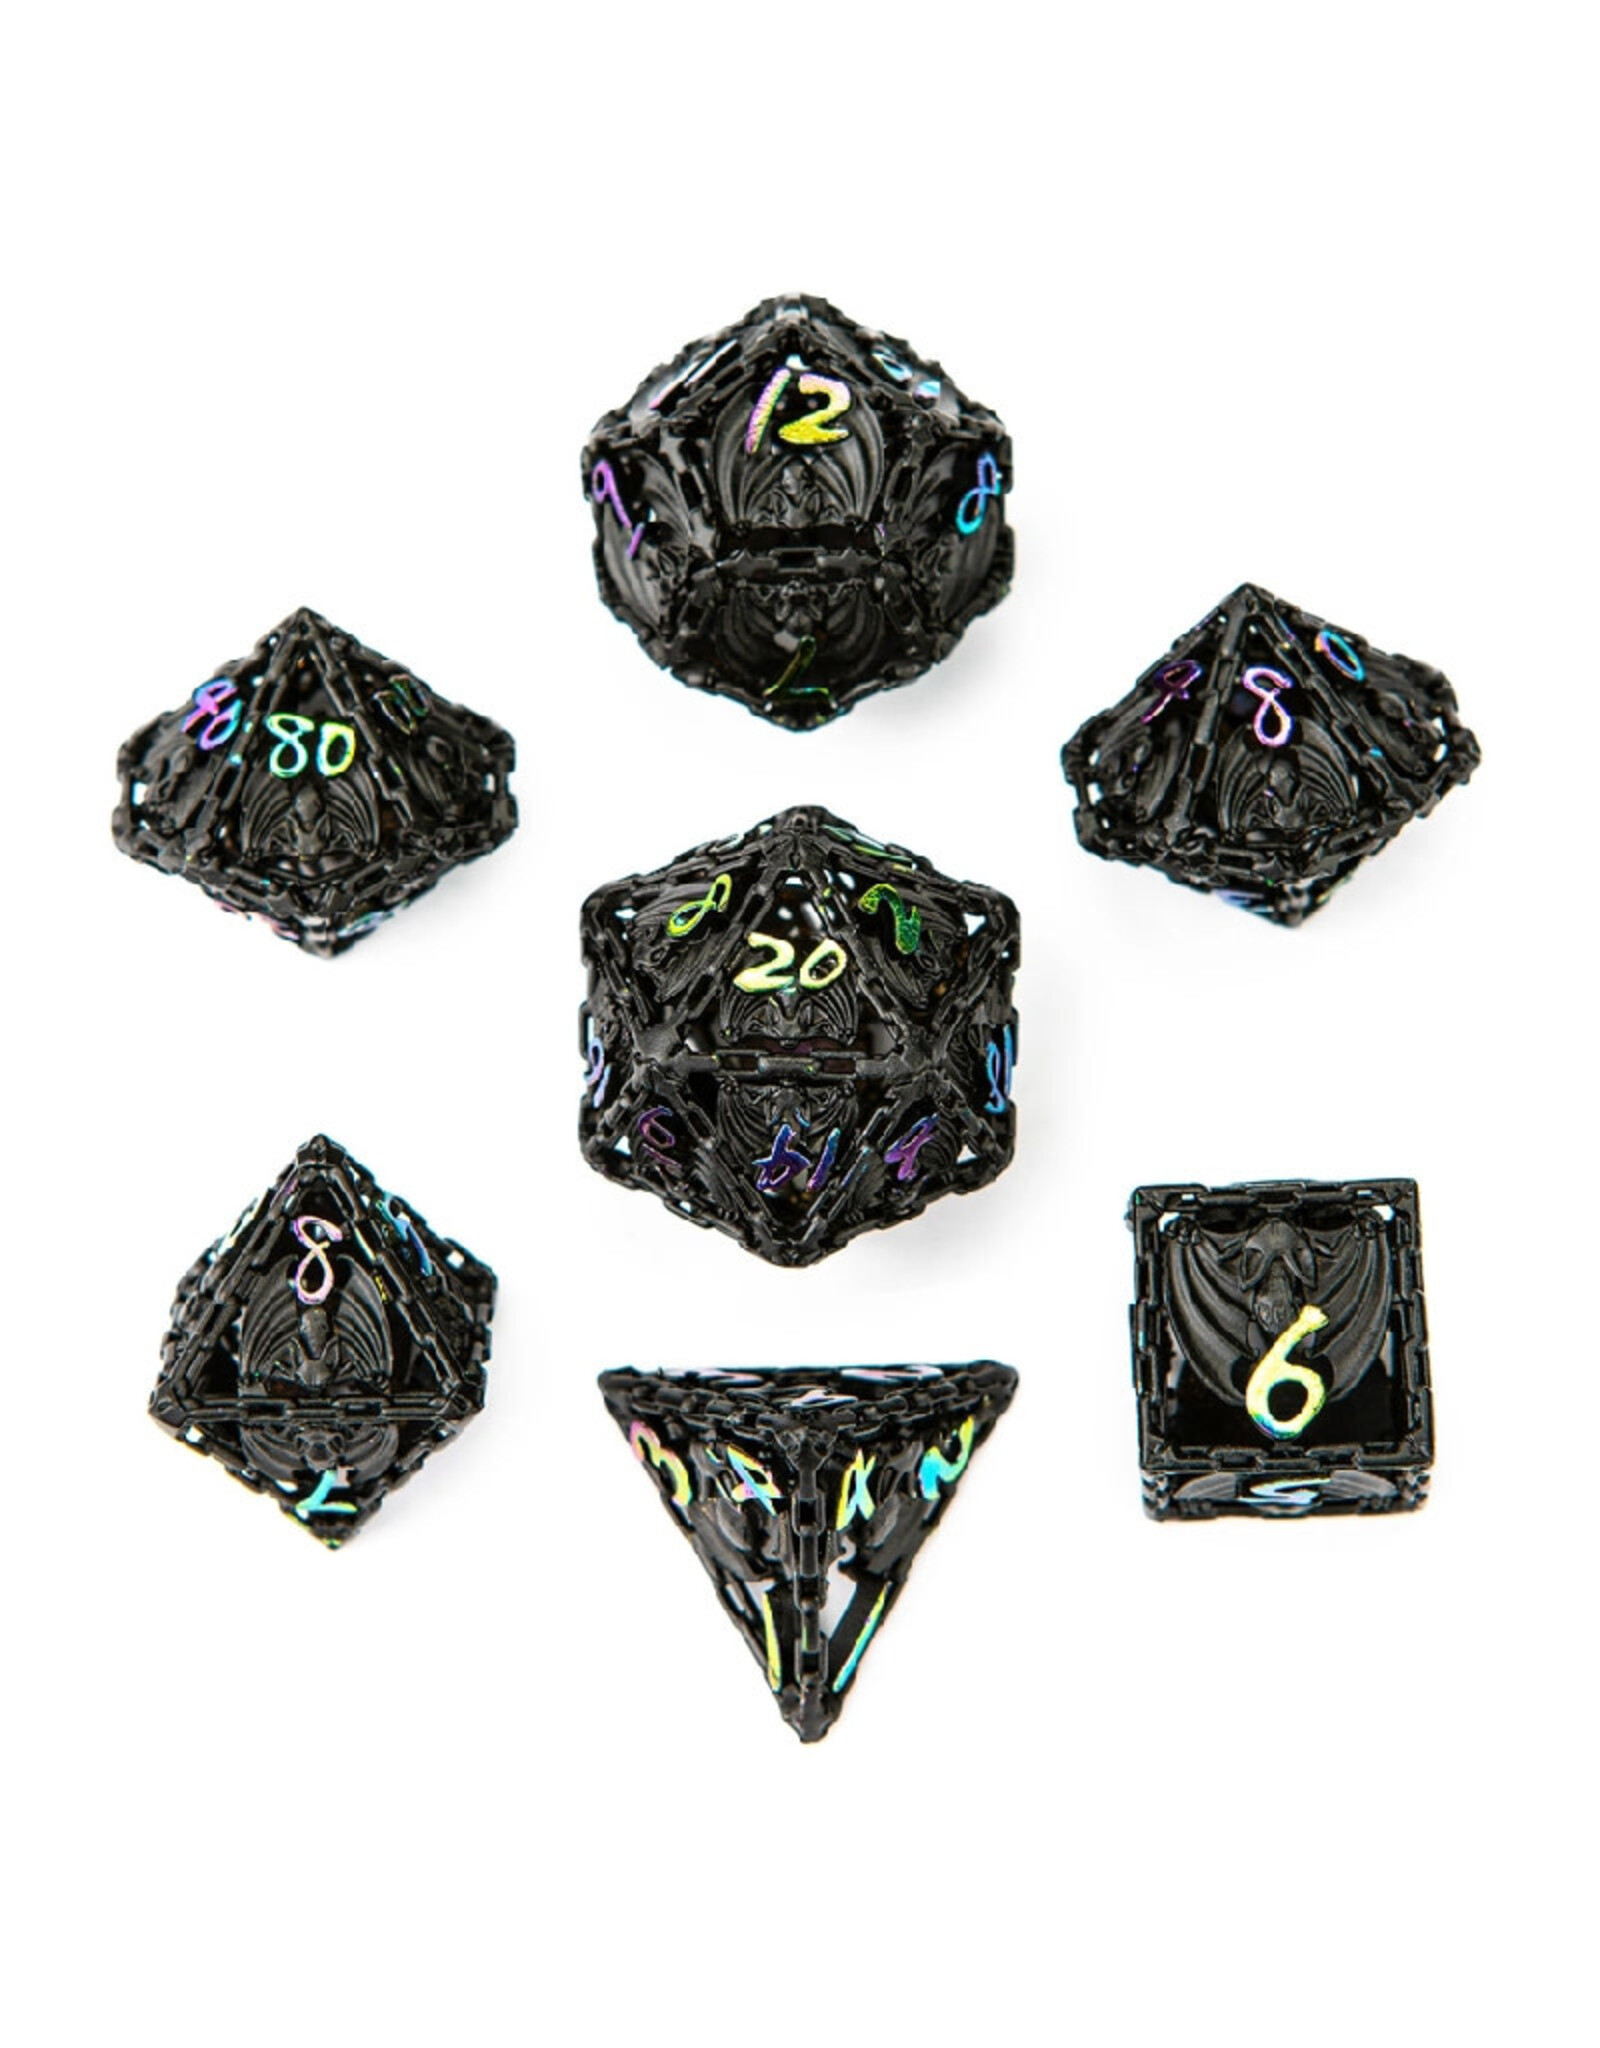 Hymgho Premium Dice Hollow Metal Bat Polyhedral Dice Set - Black with Rainbow